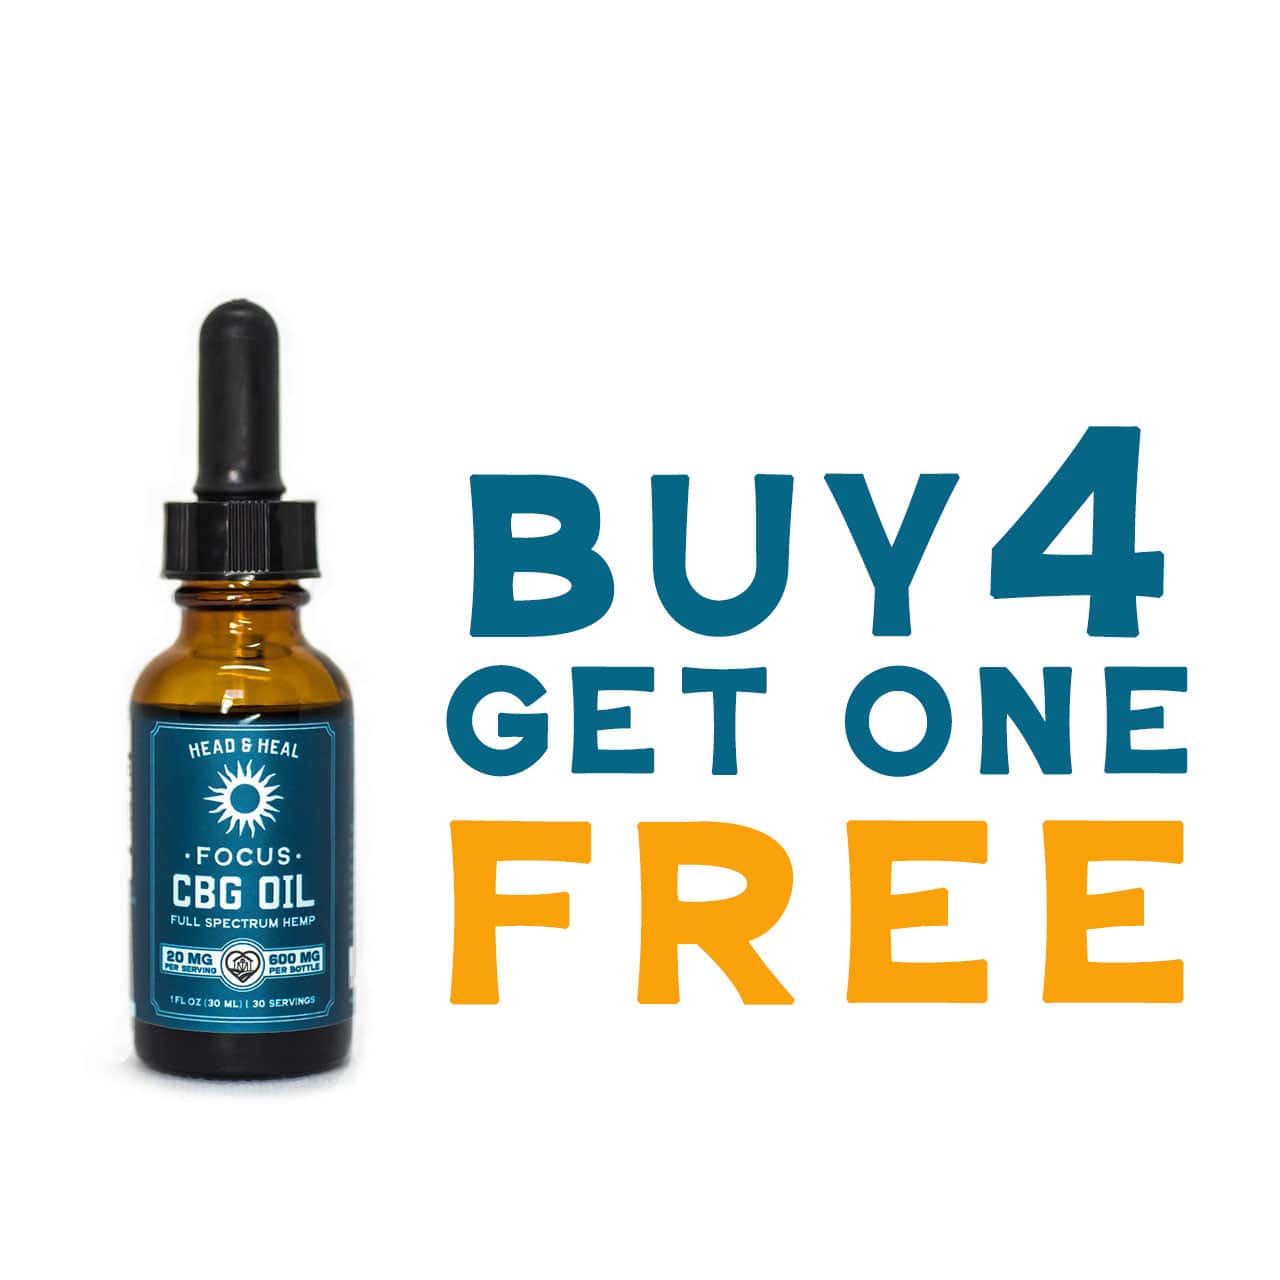 Focus - CBG Oil / Buy 4 Get 1 Free | Head & Heal